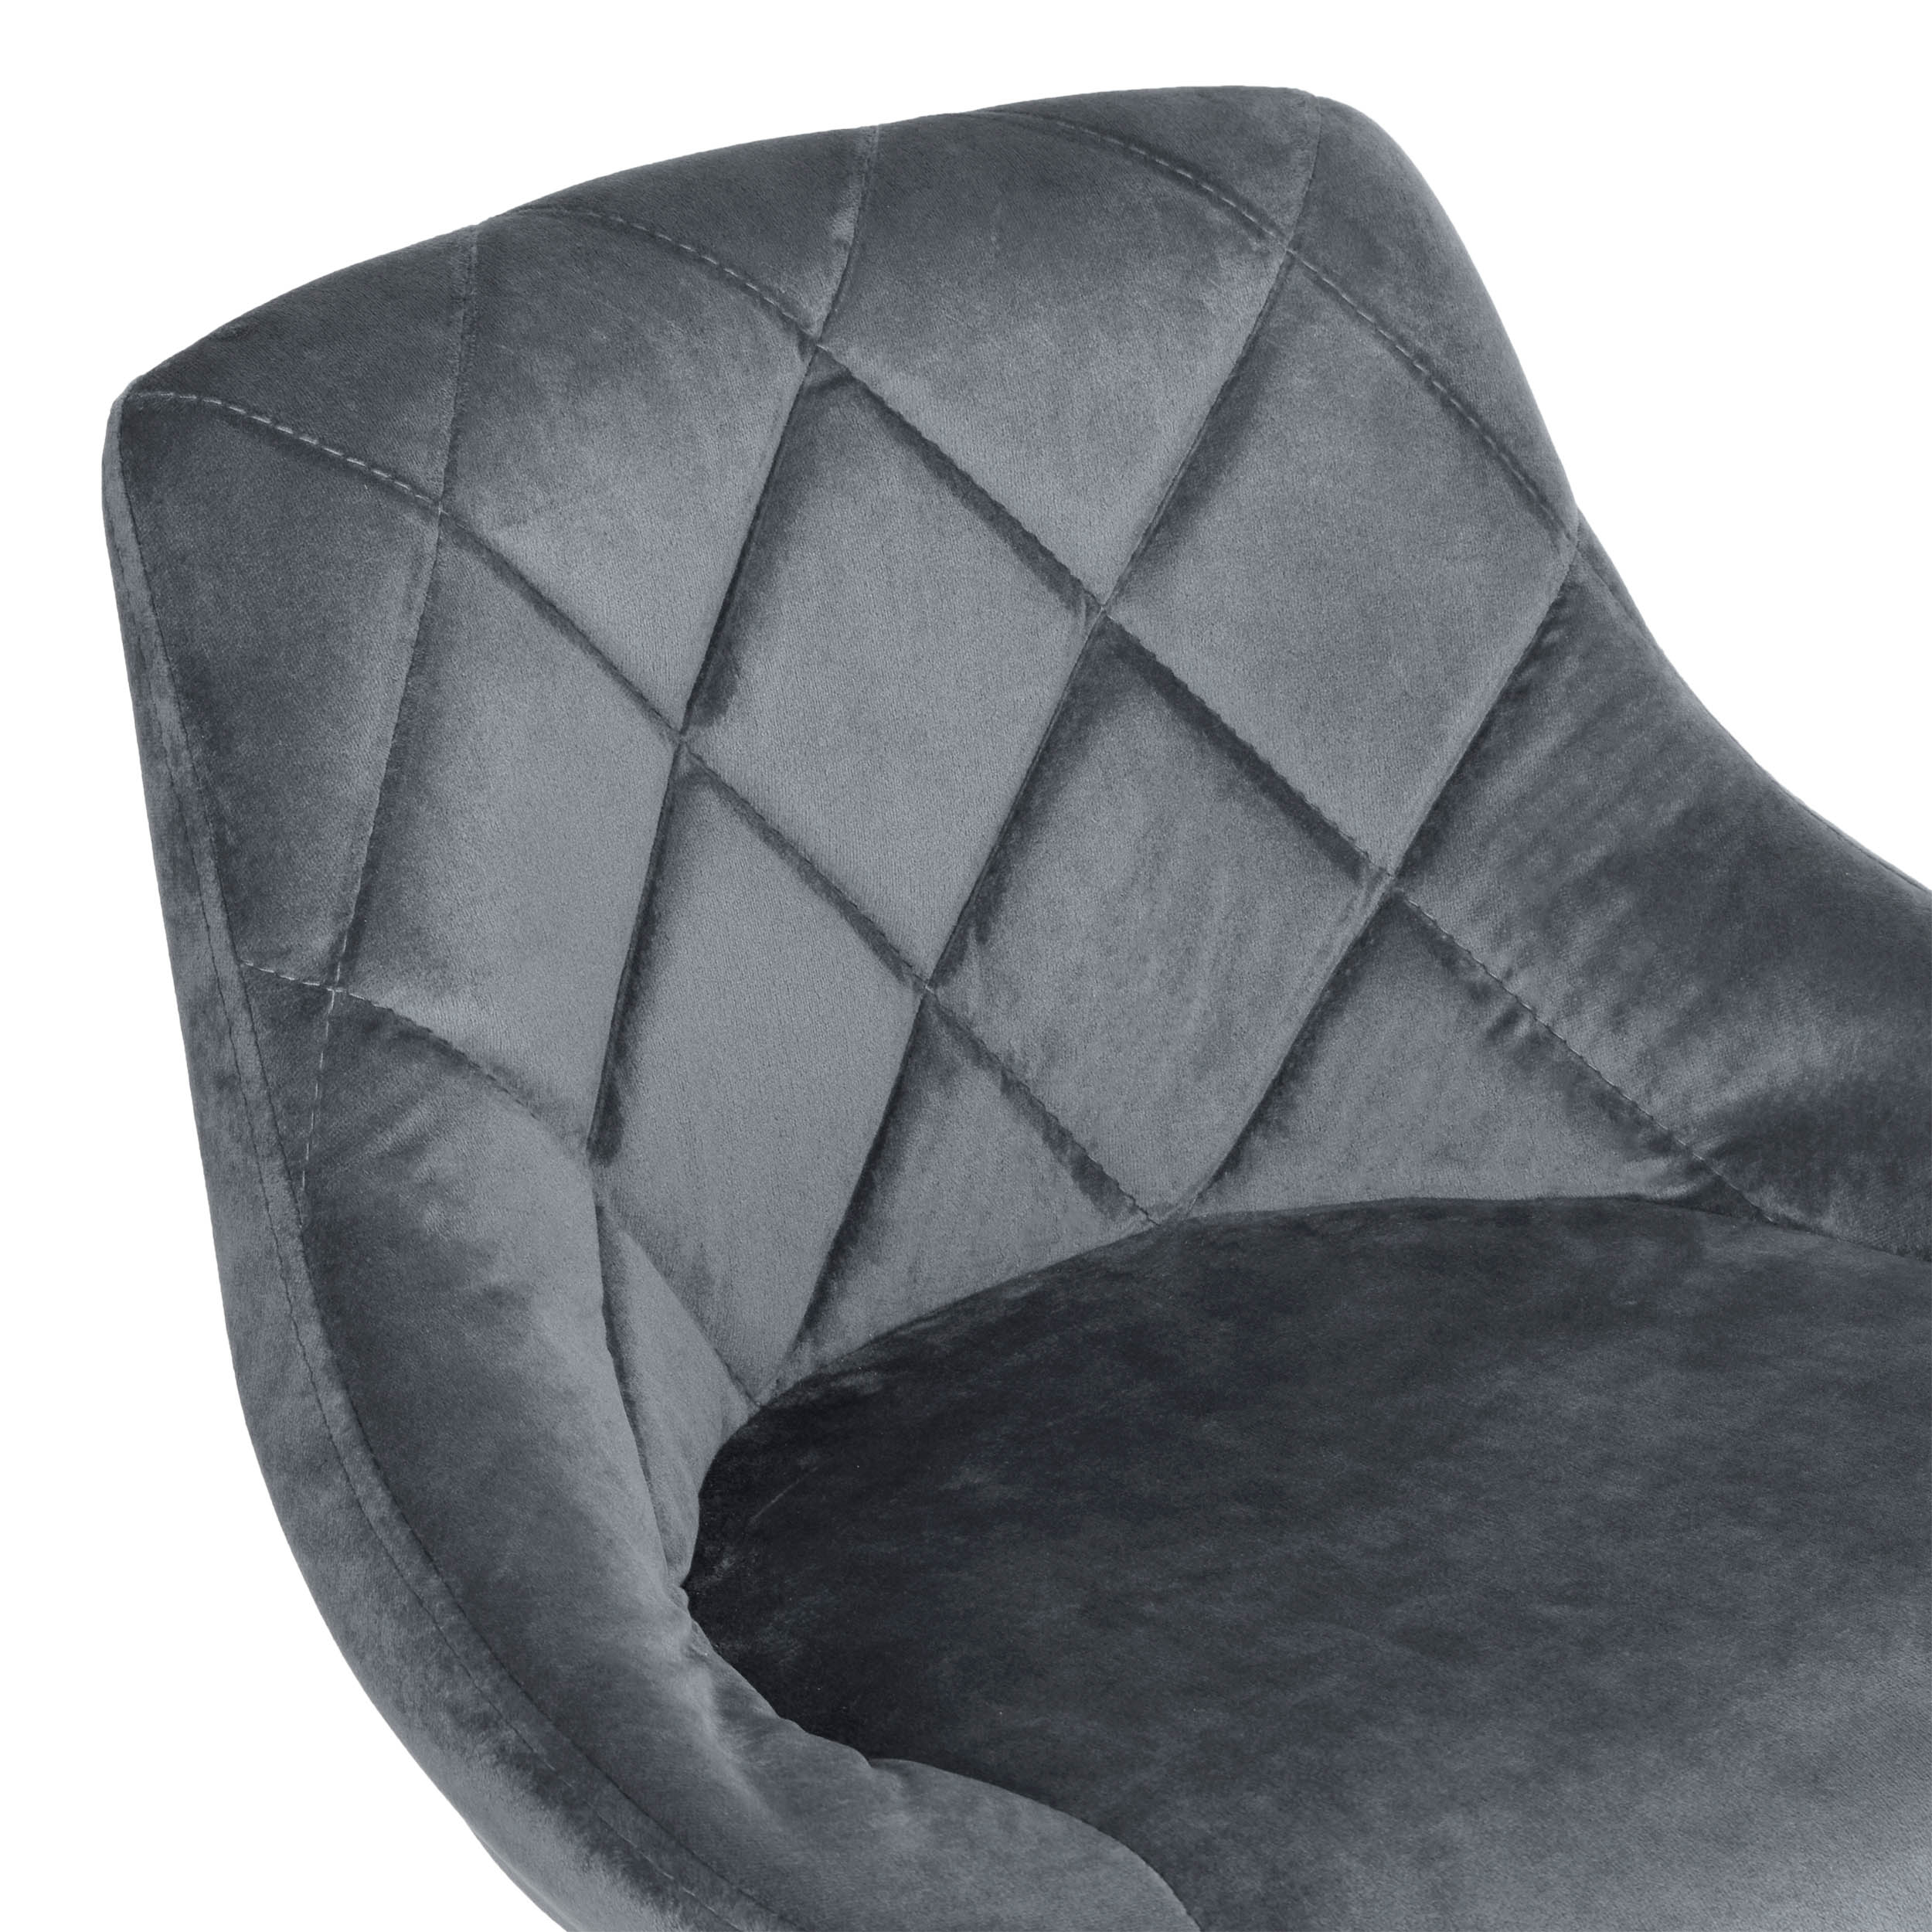 Krzesło obrotowe Cydro Black grafitowe Velvet